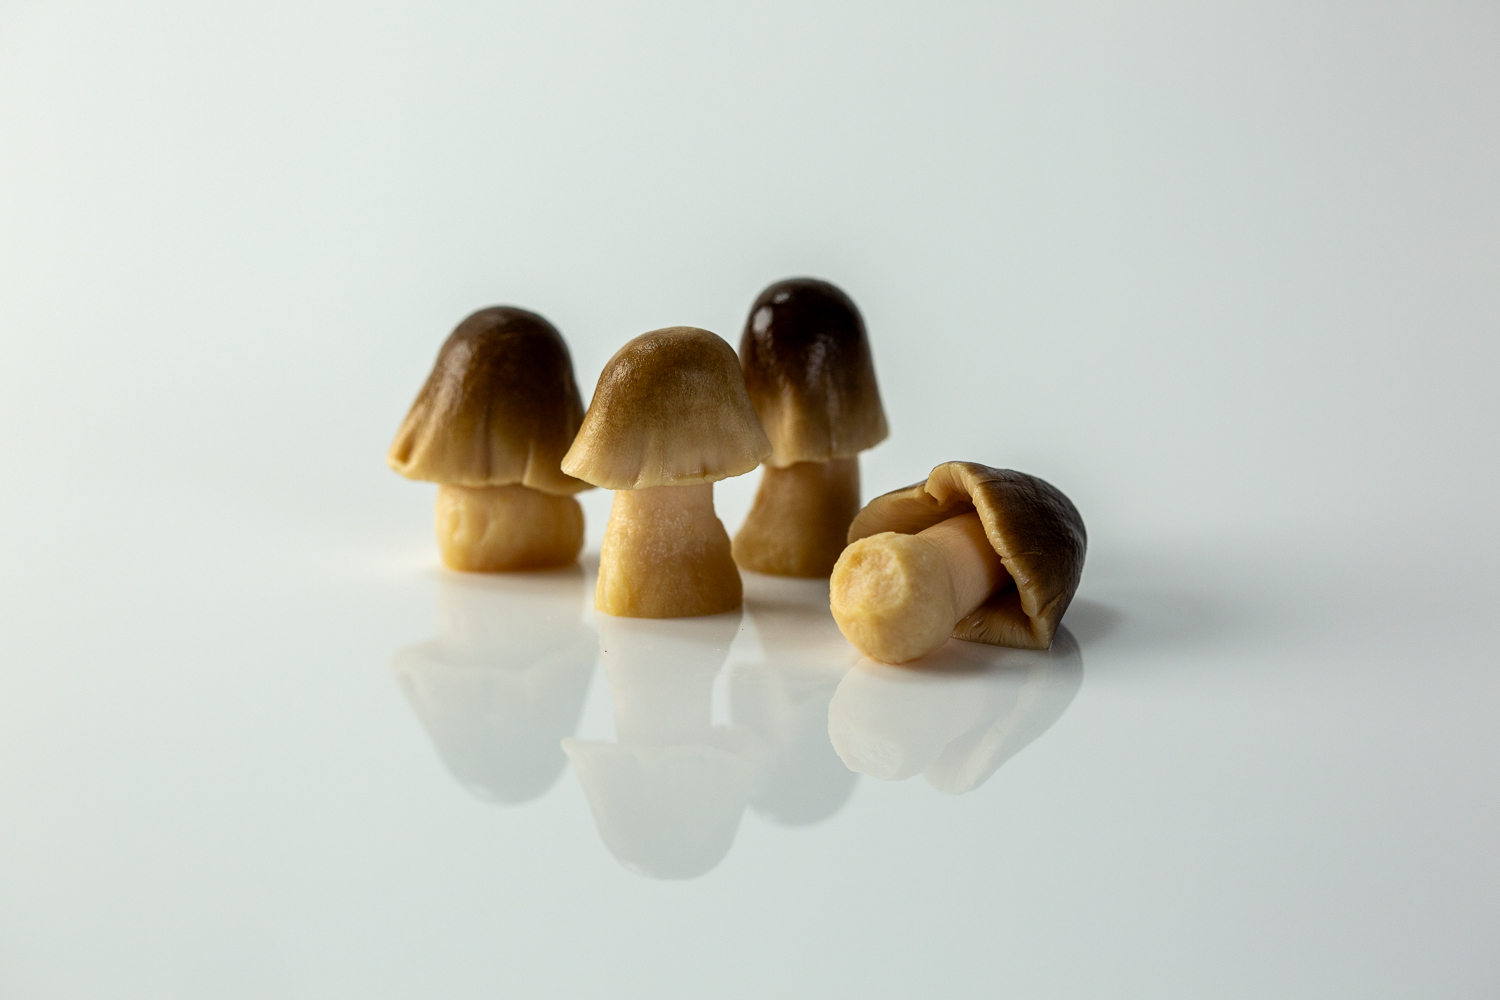 Growing Popular Varieties of Mushrooms: Part 3 - Paddy Straw